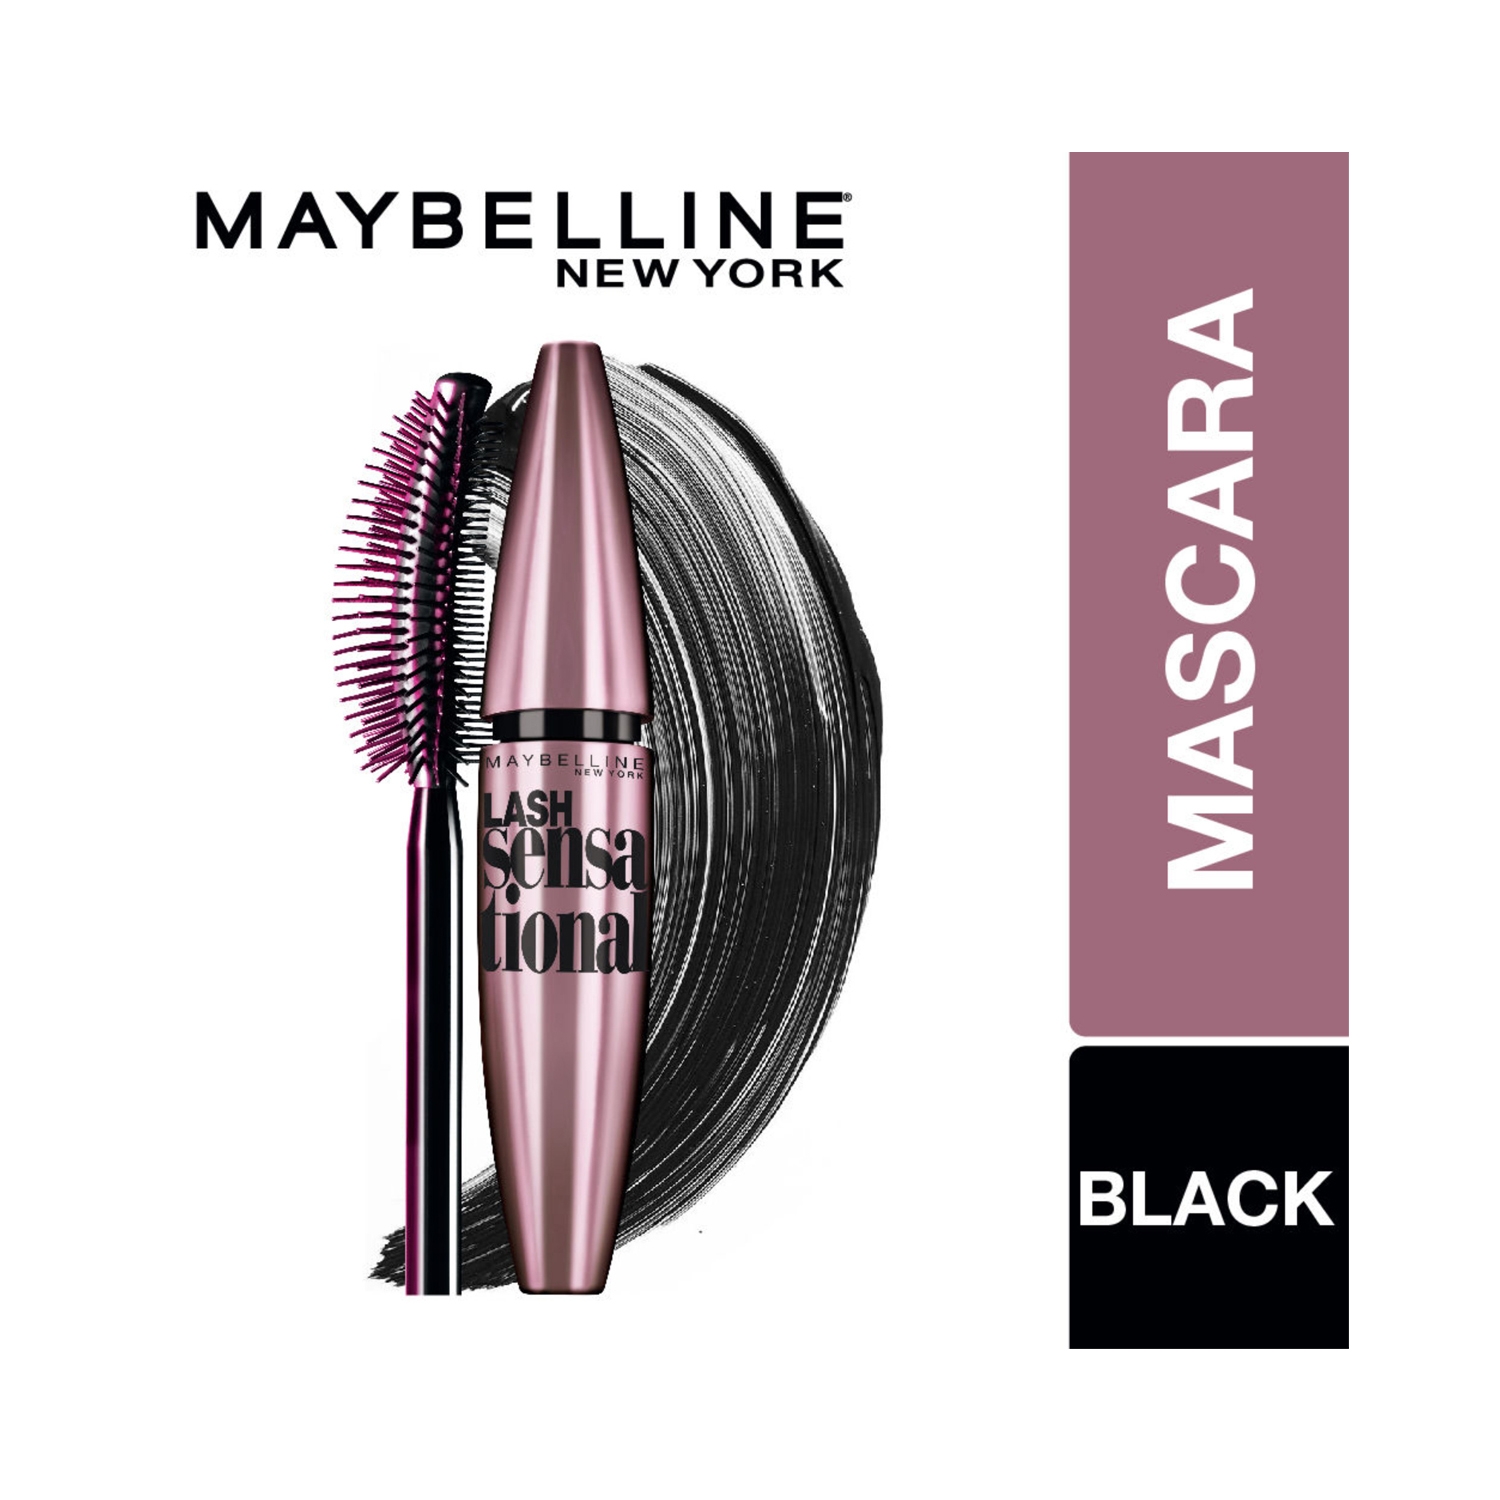 Maybelline New York | Maybelline New York Lash Sensational Waterproof Mascara - Black (10ml)